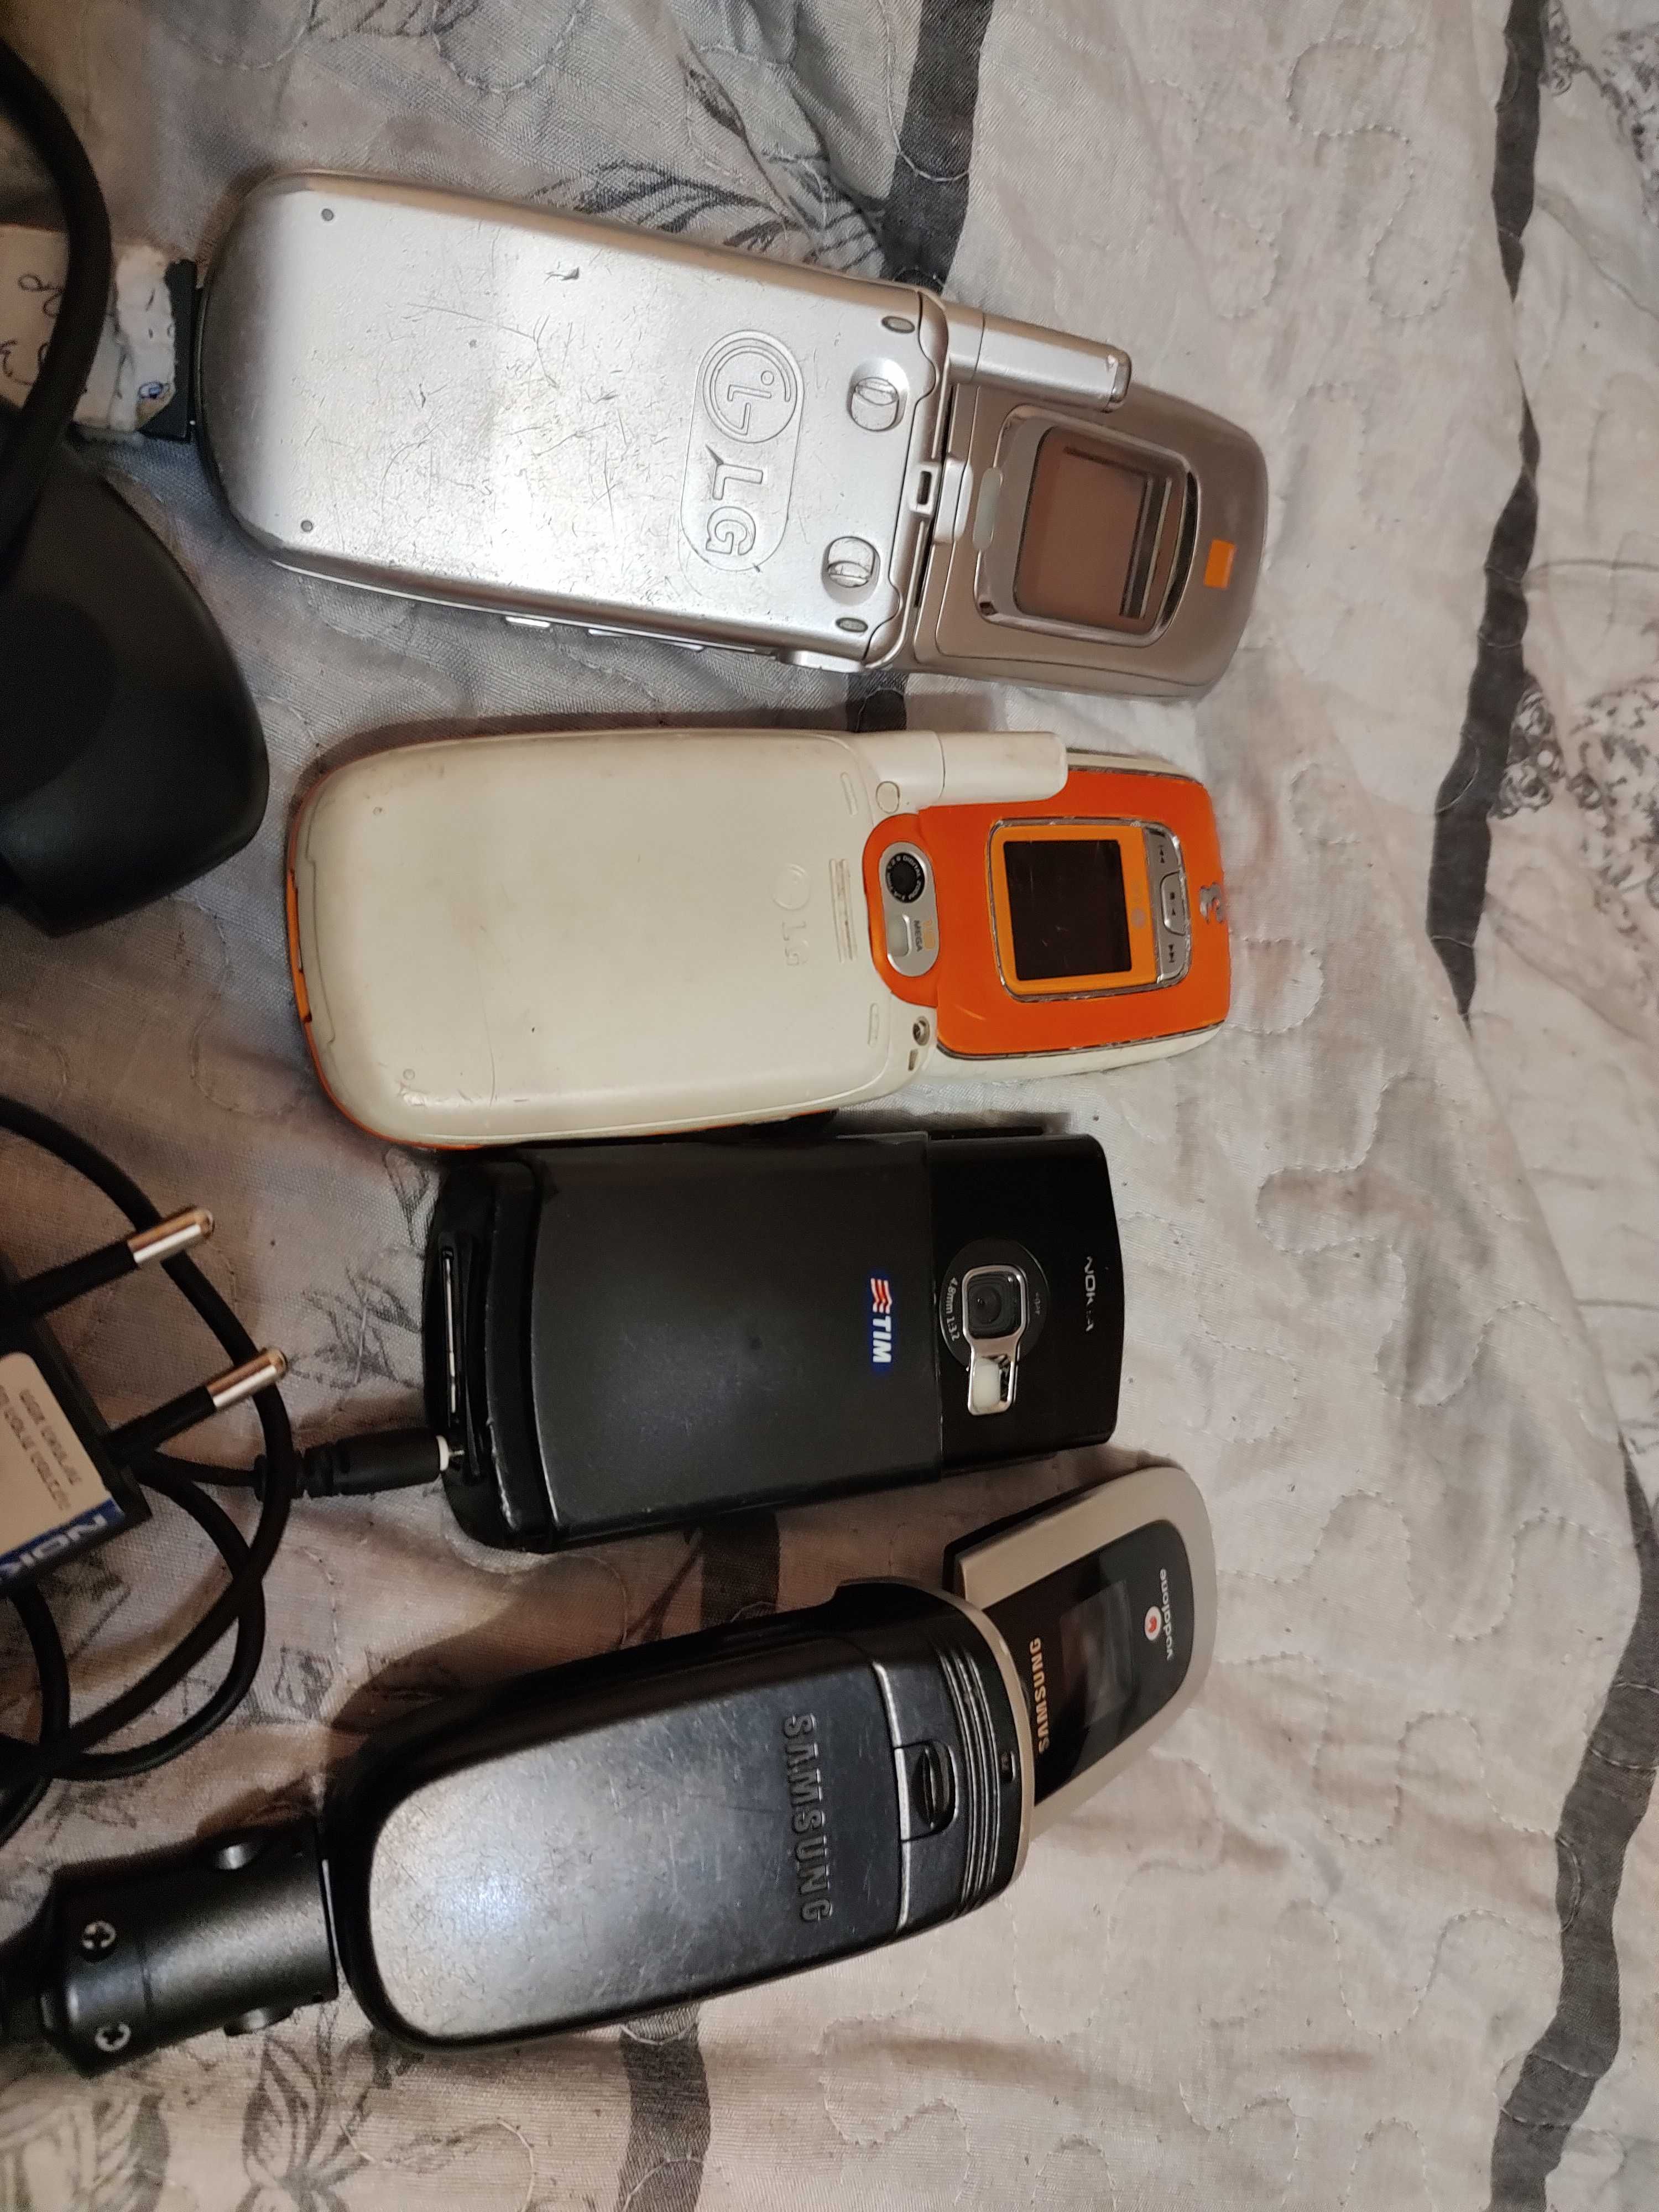 4 telefoane retro (Nokia, Samsung, LG)